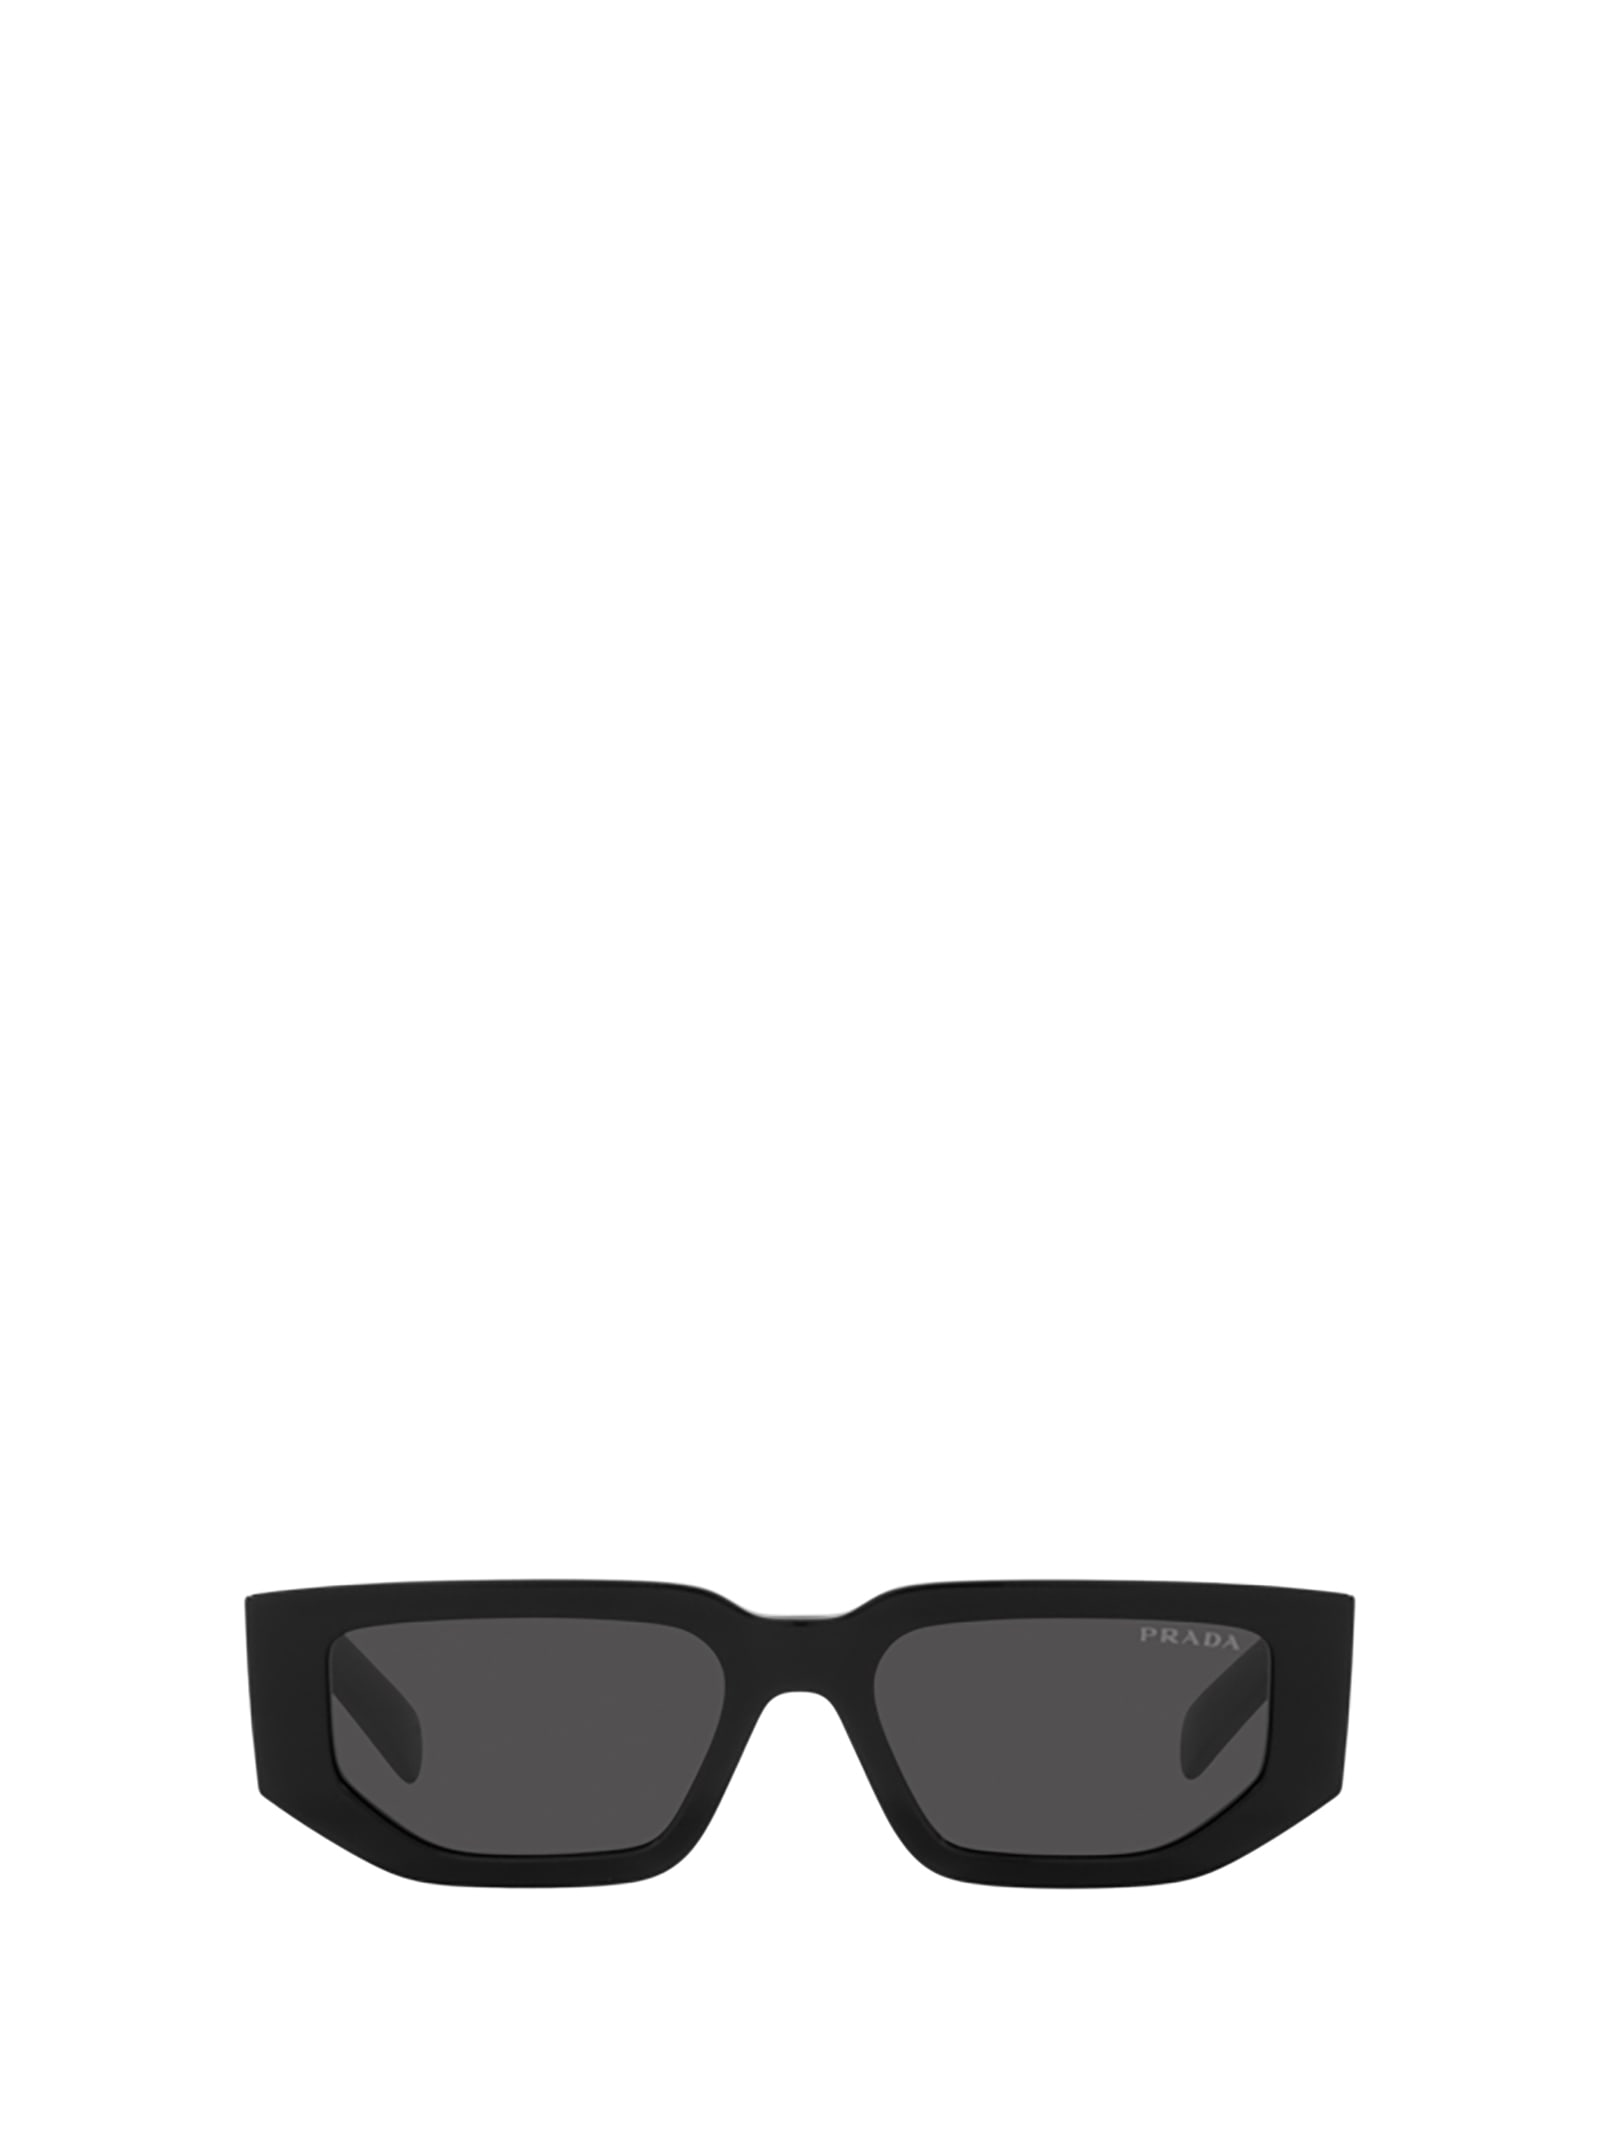 Prada Pr 09zs Black Sunglasses